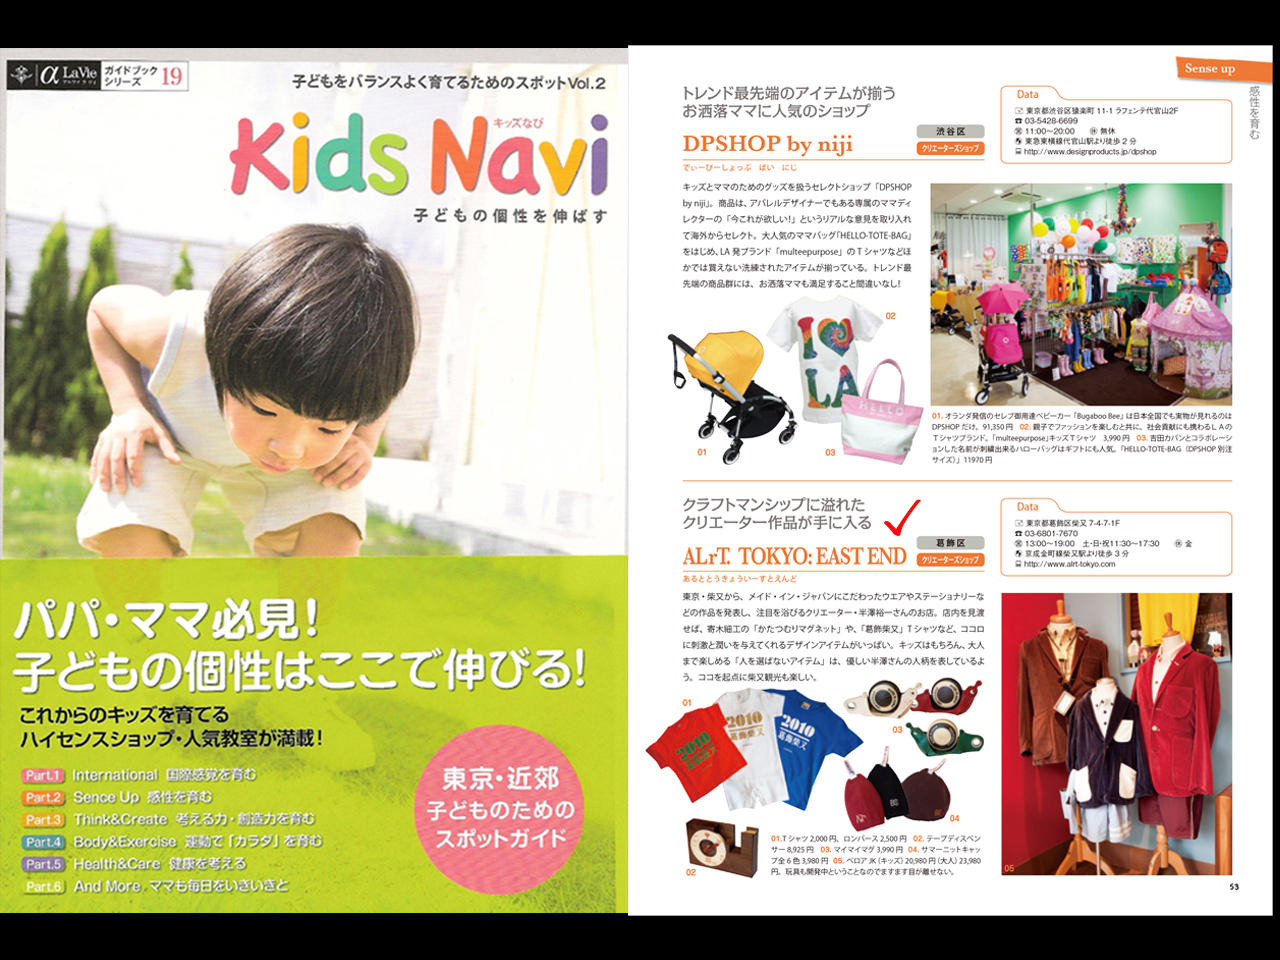 http://alrt.tokyo/news/kidsnavi.jpg